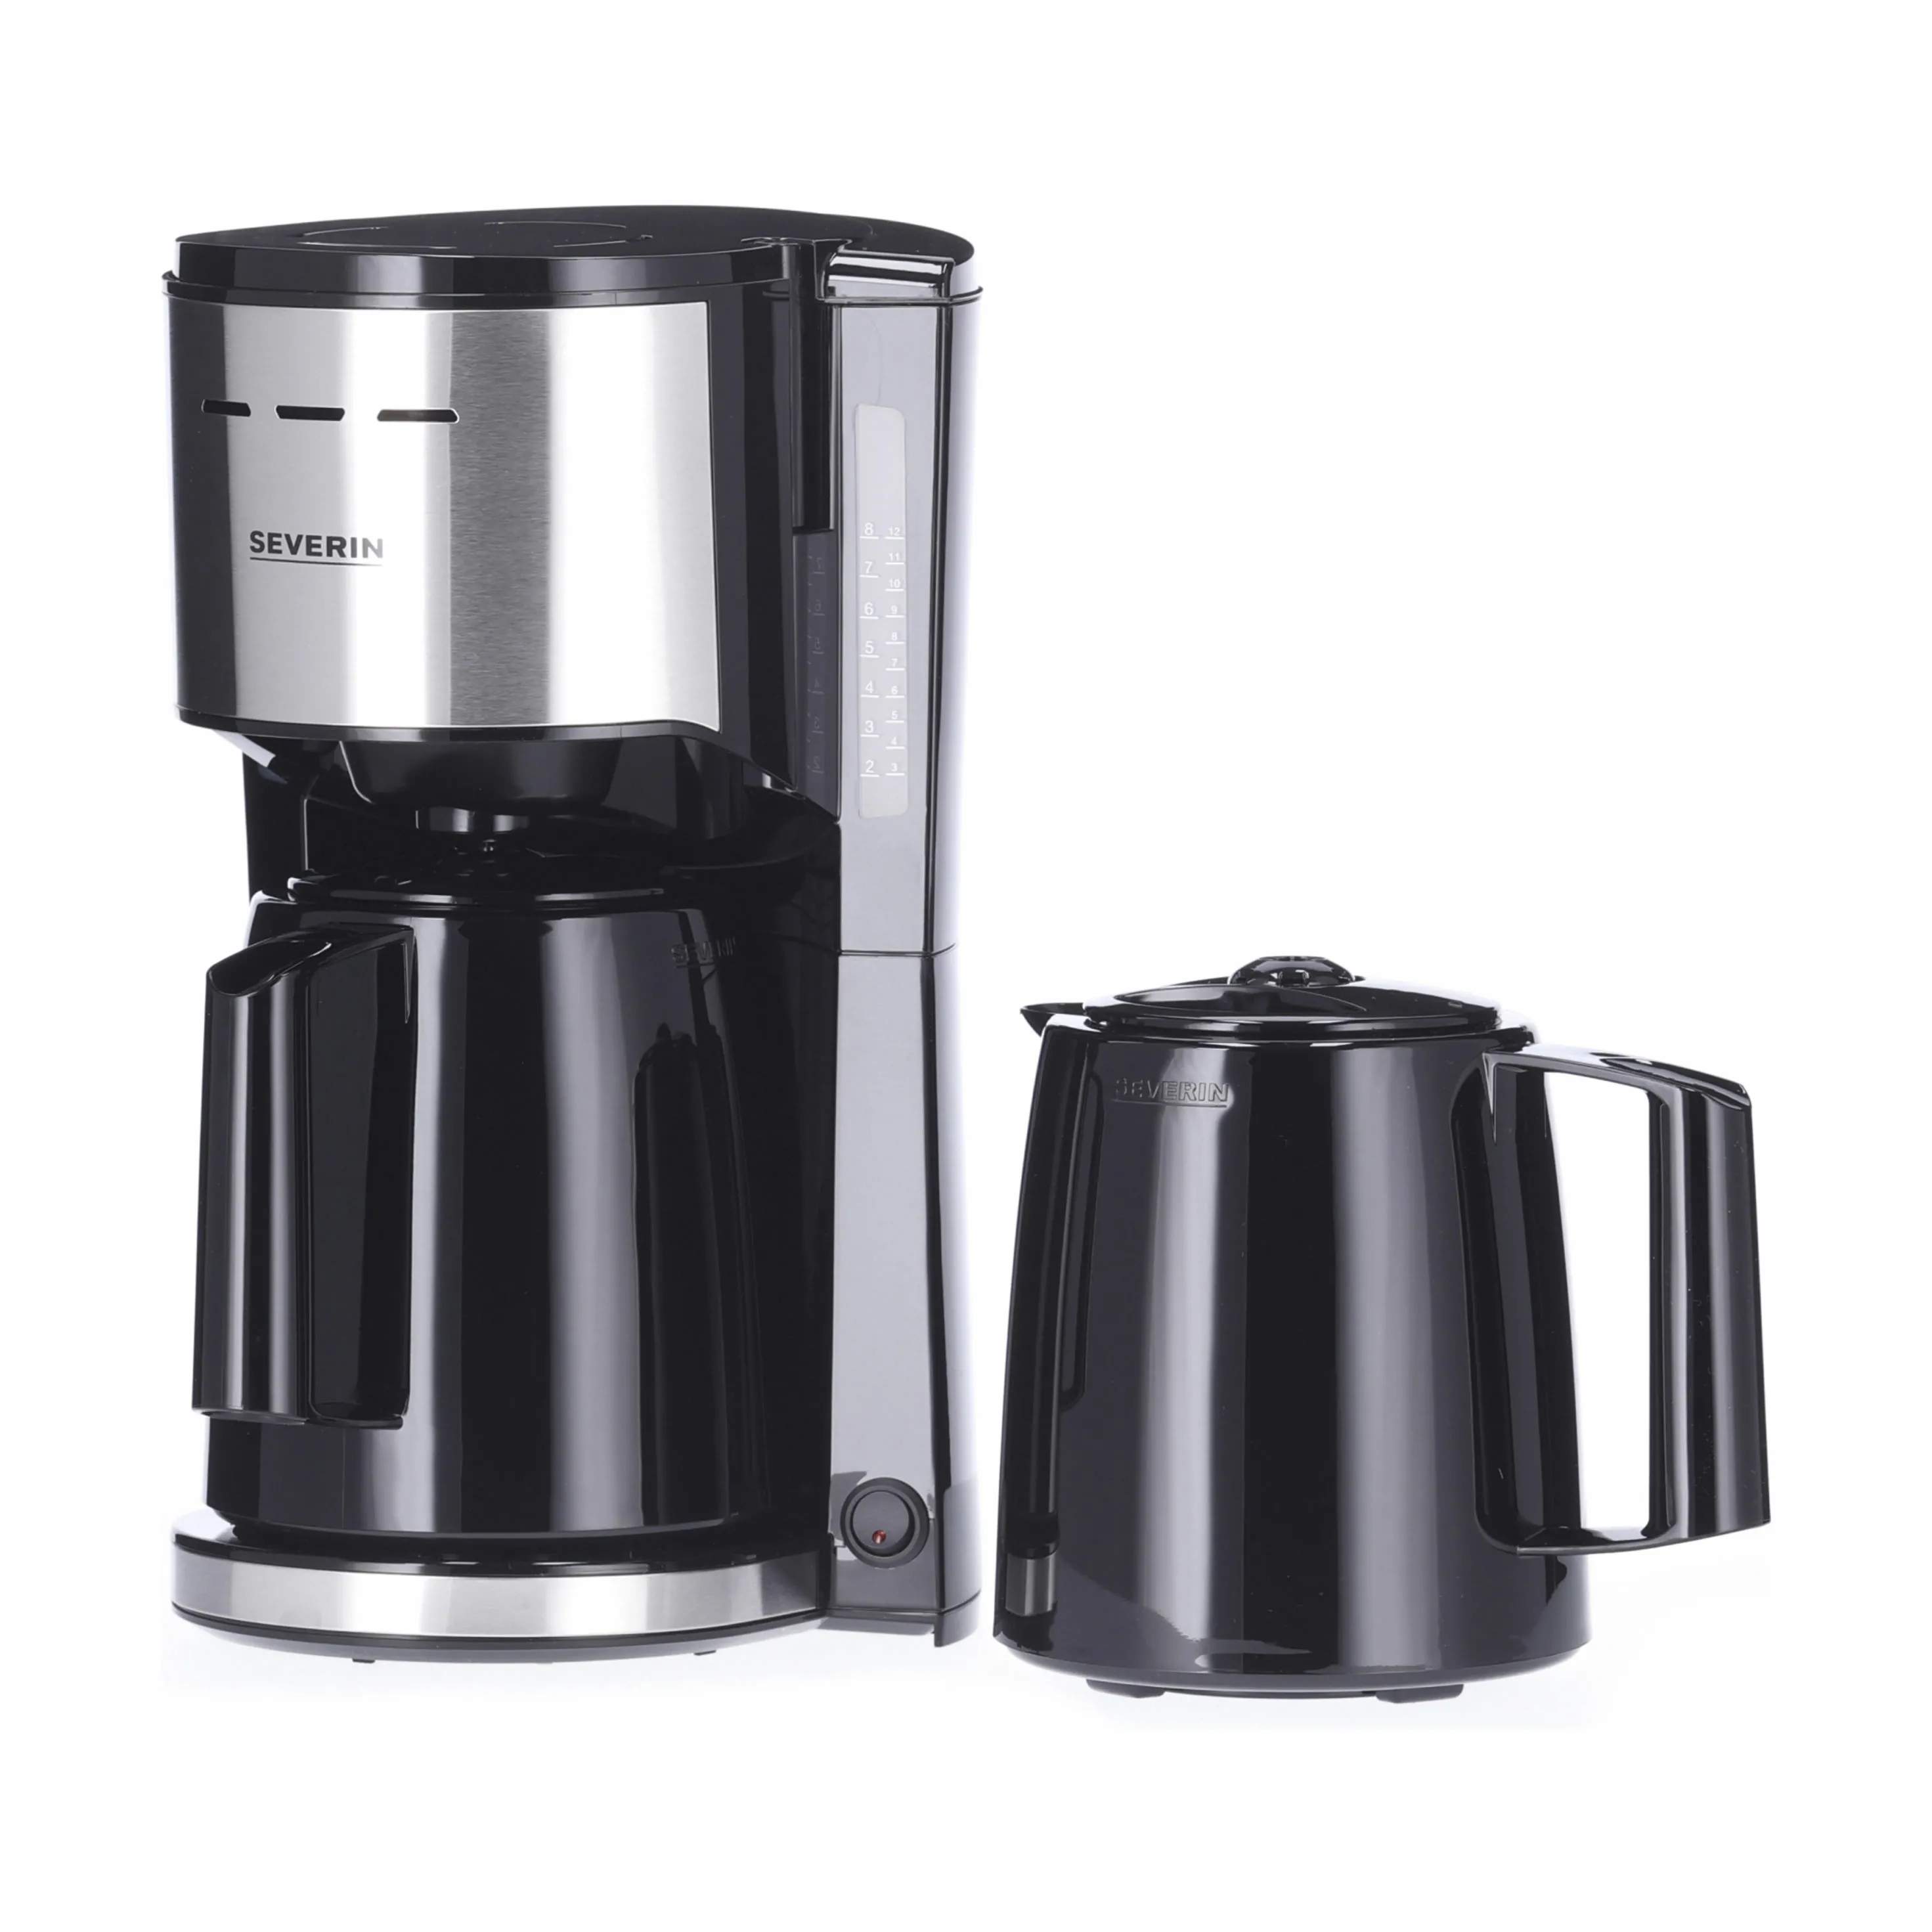 Severin - Kaffemaskine m. to kander - 1000 watt - kopper - Sort/stål | Imerco